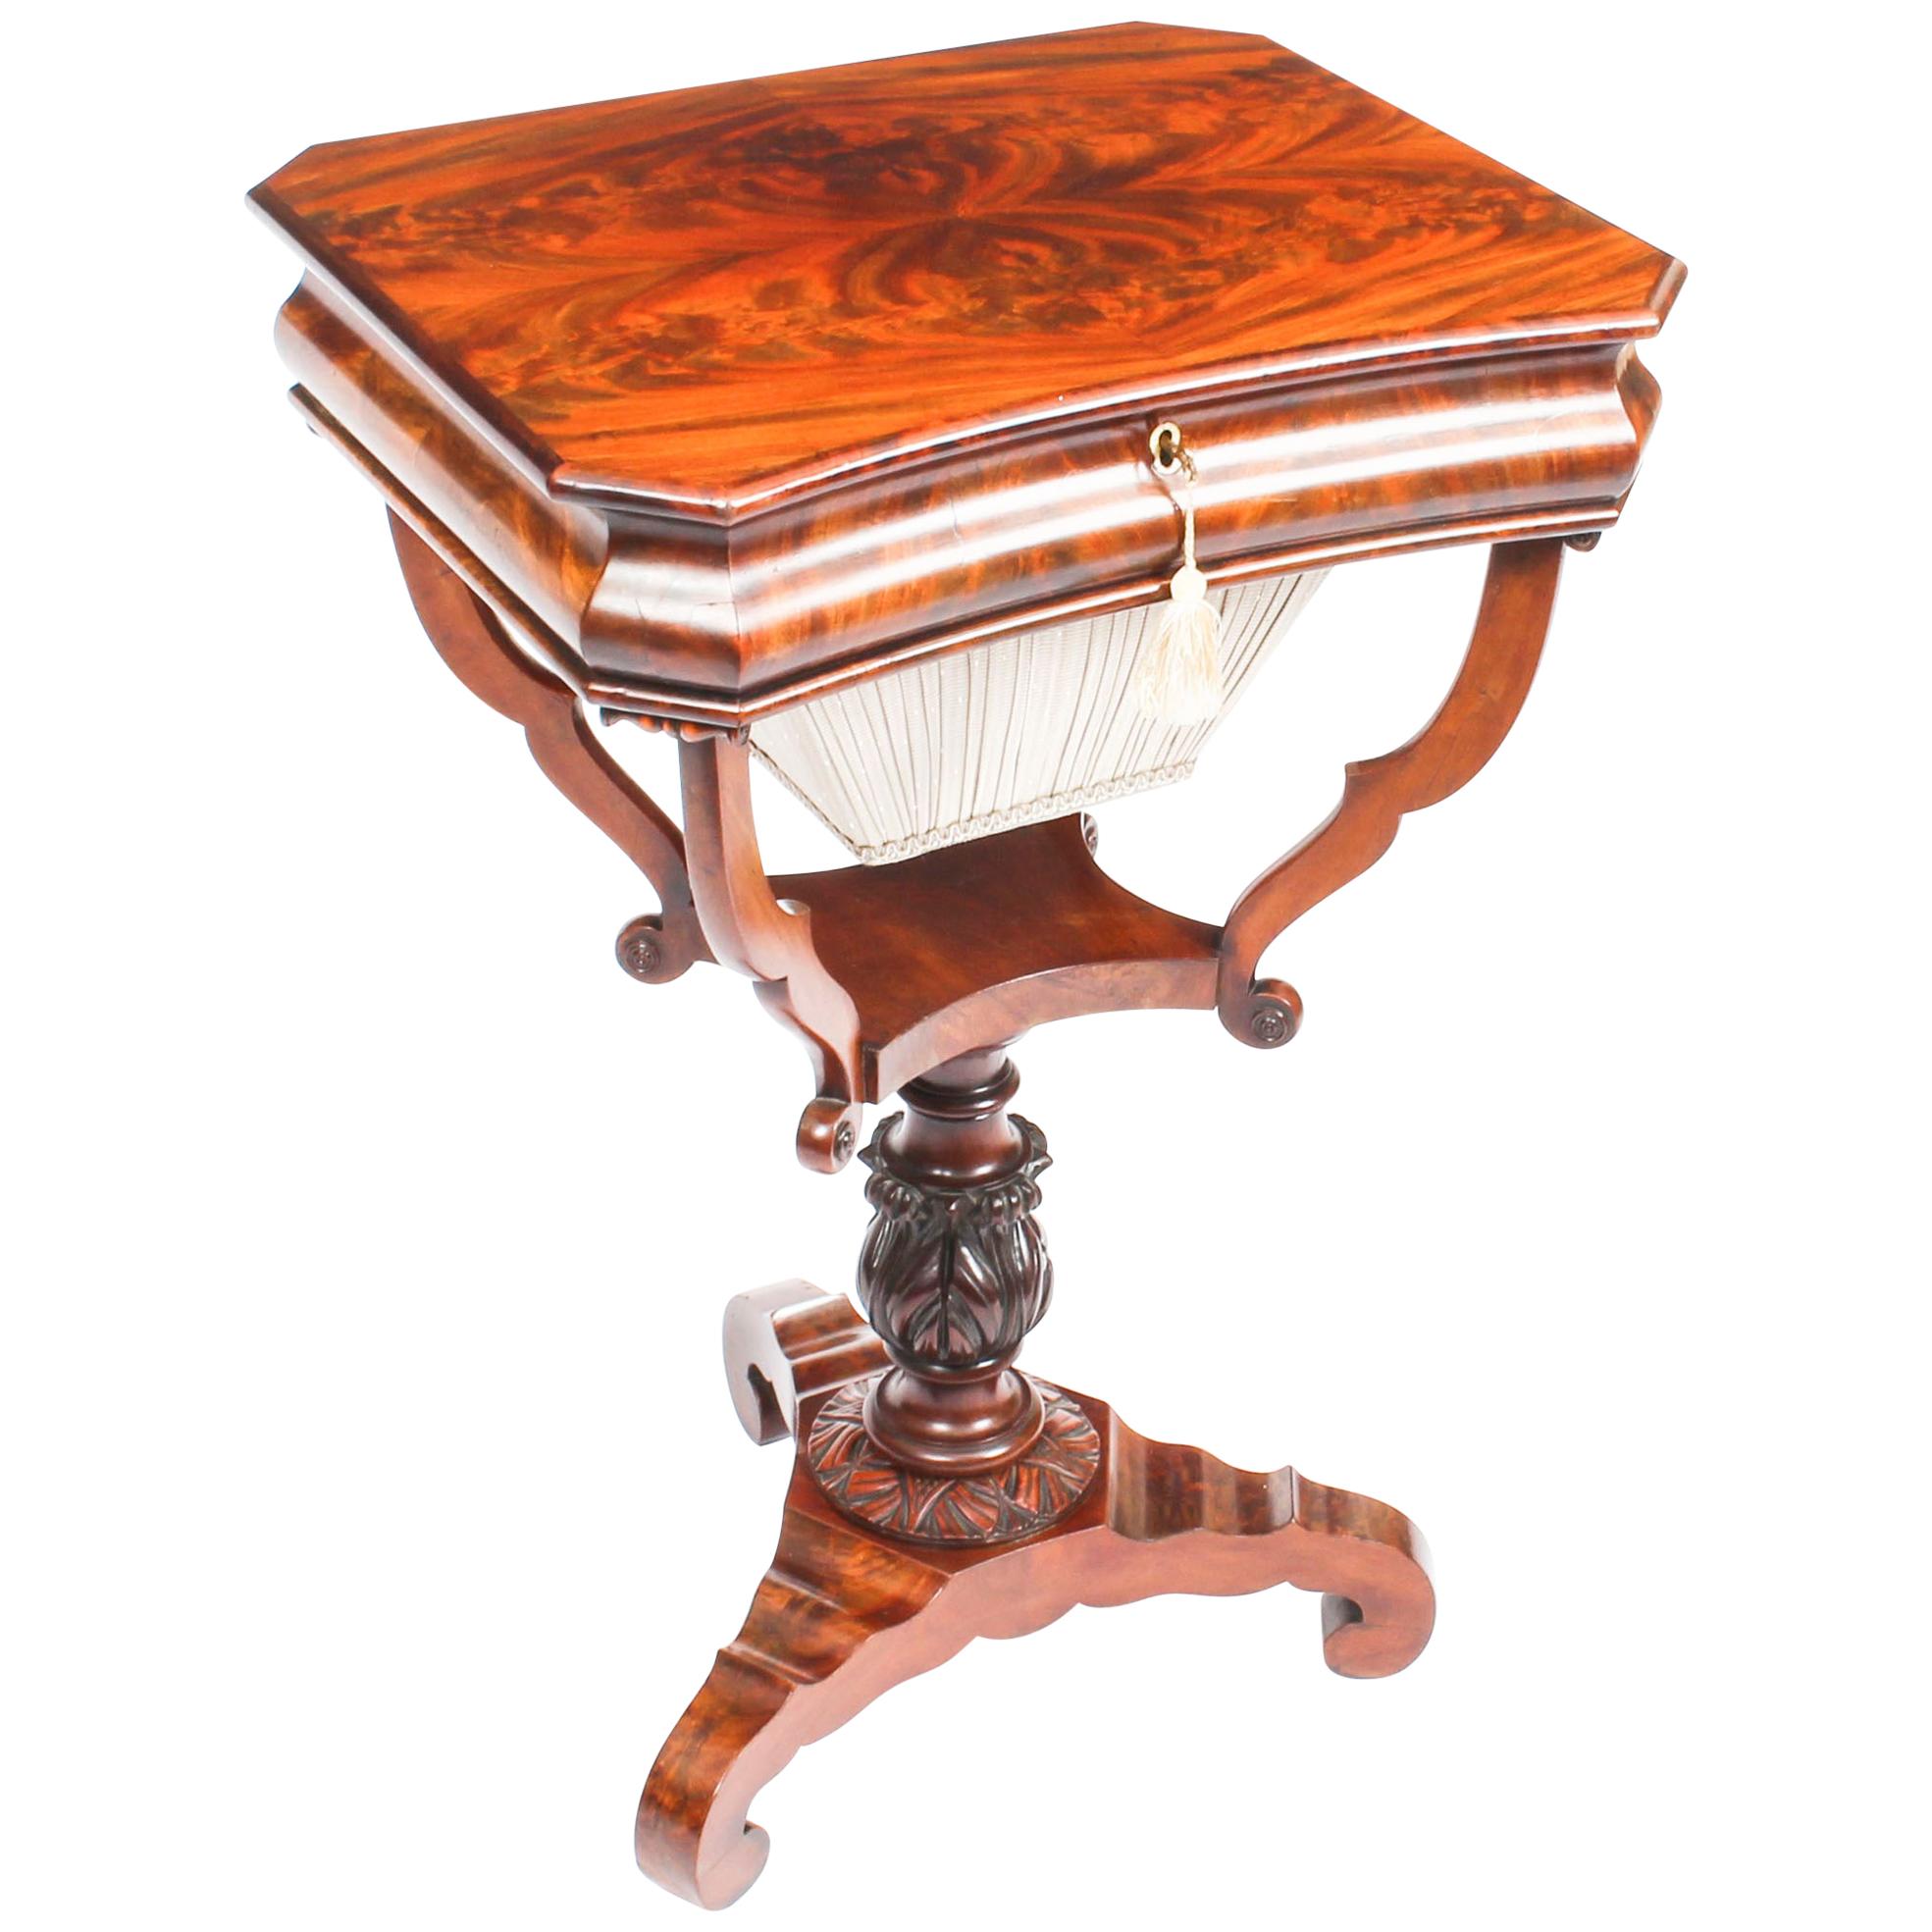 Antique William IV Flame Mahogany Work Table, 19th Century